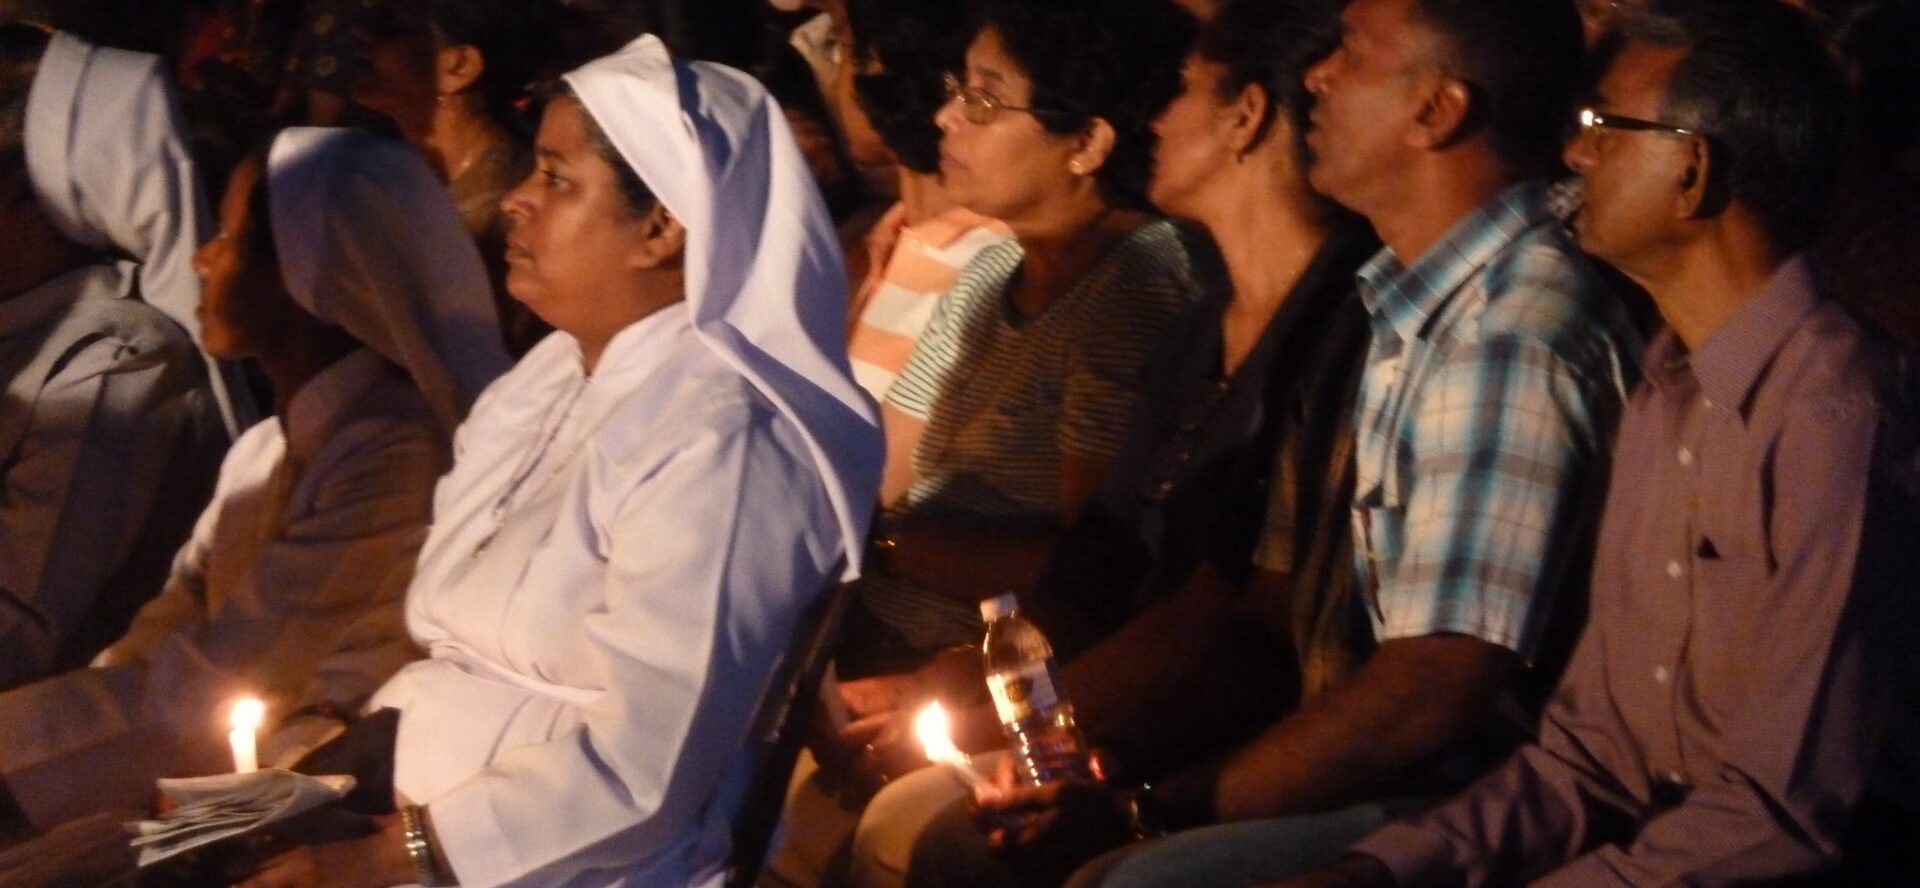 Evénement contre la persécution des chrétiens en Inde, en 2015 | © Frederick Noronha/Flickr/CC BY-SA 2.0